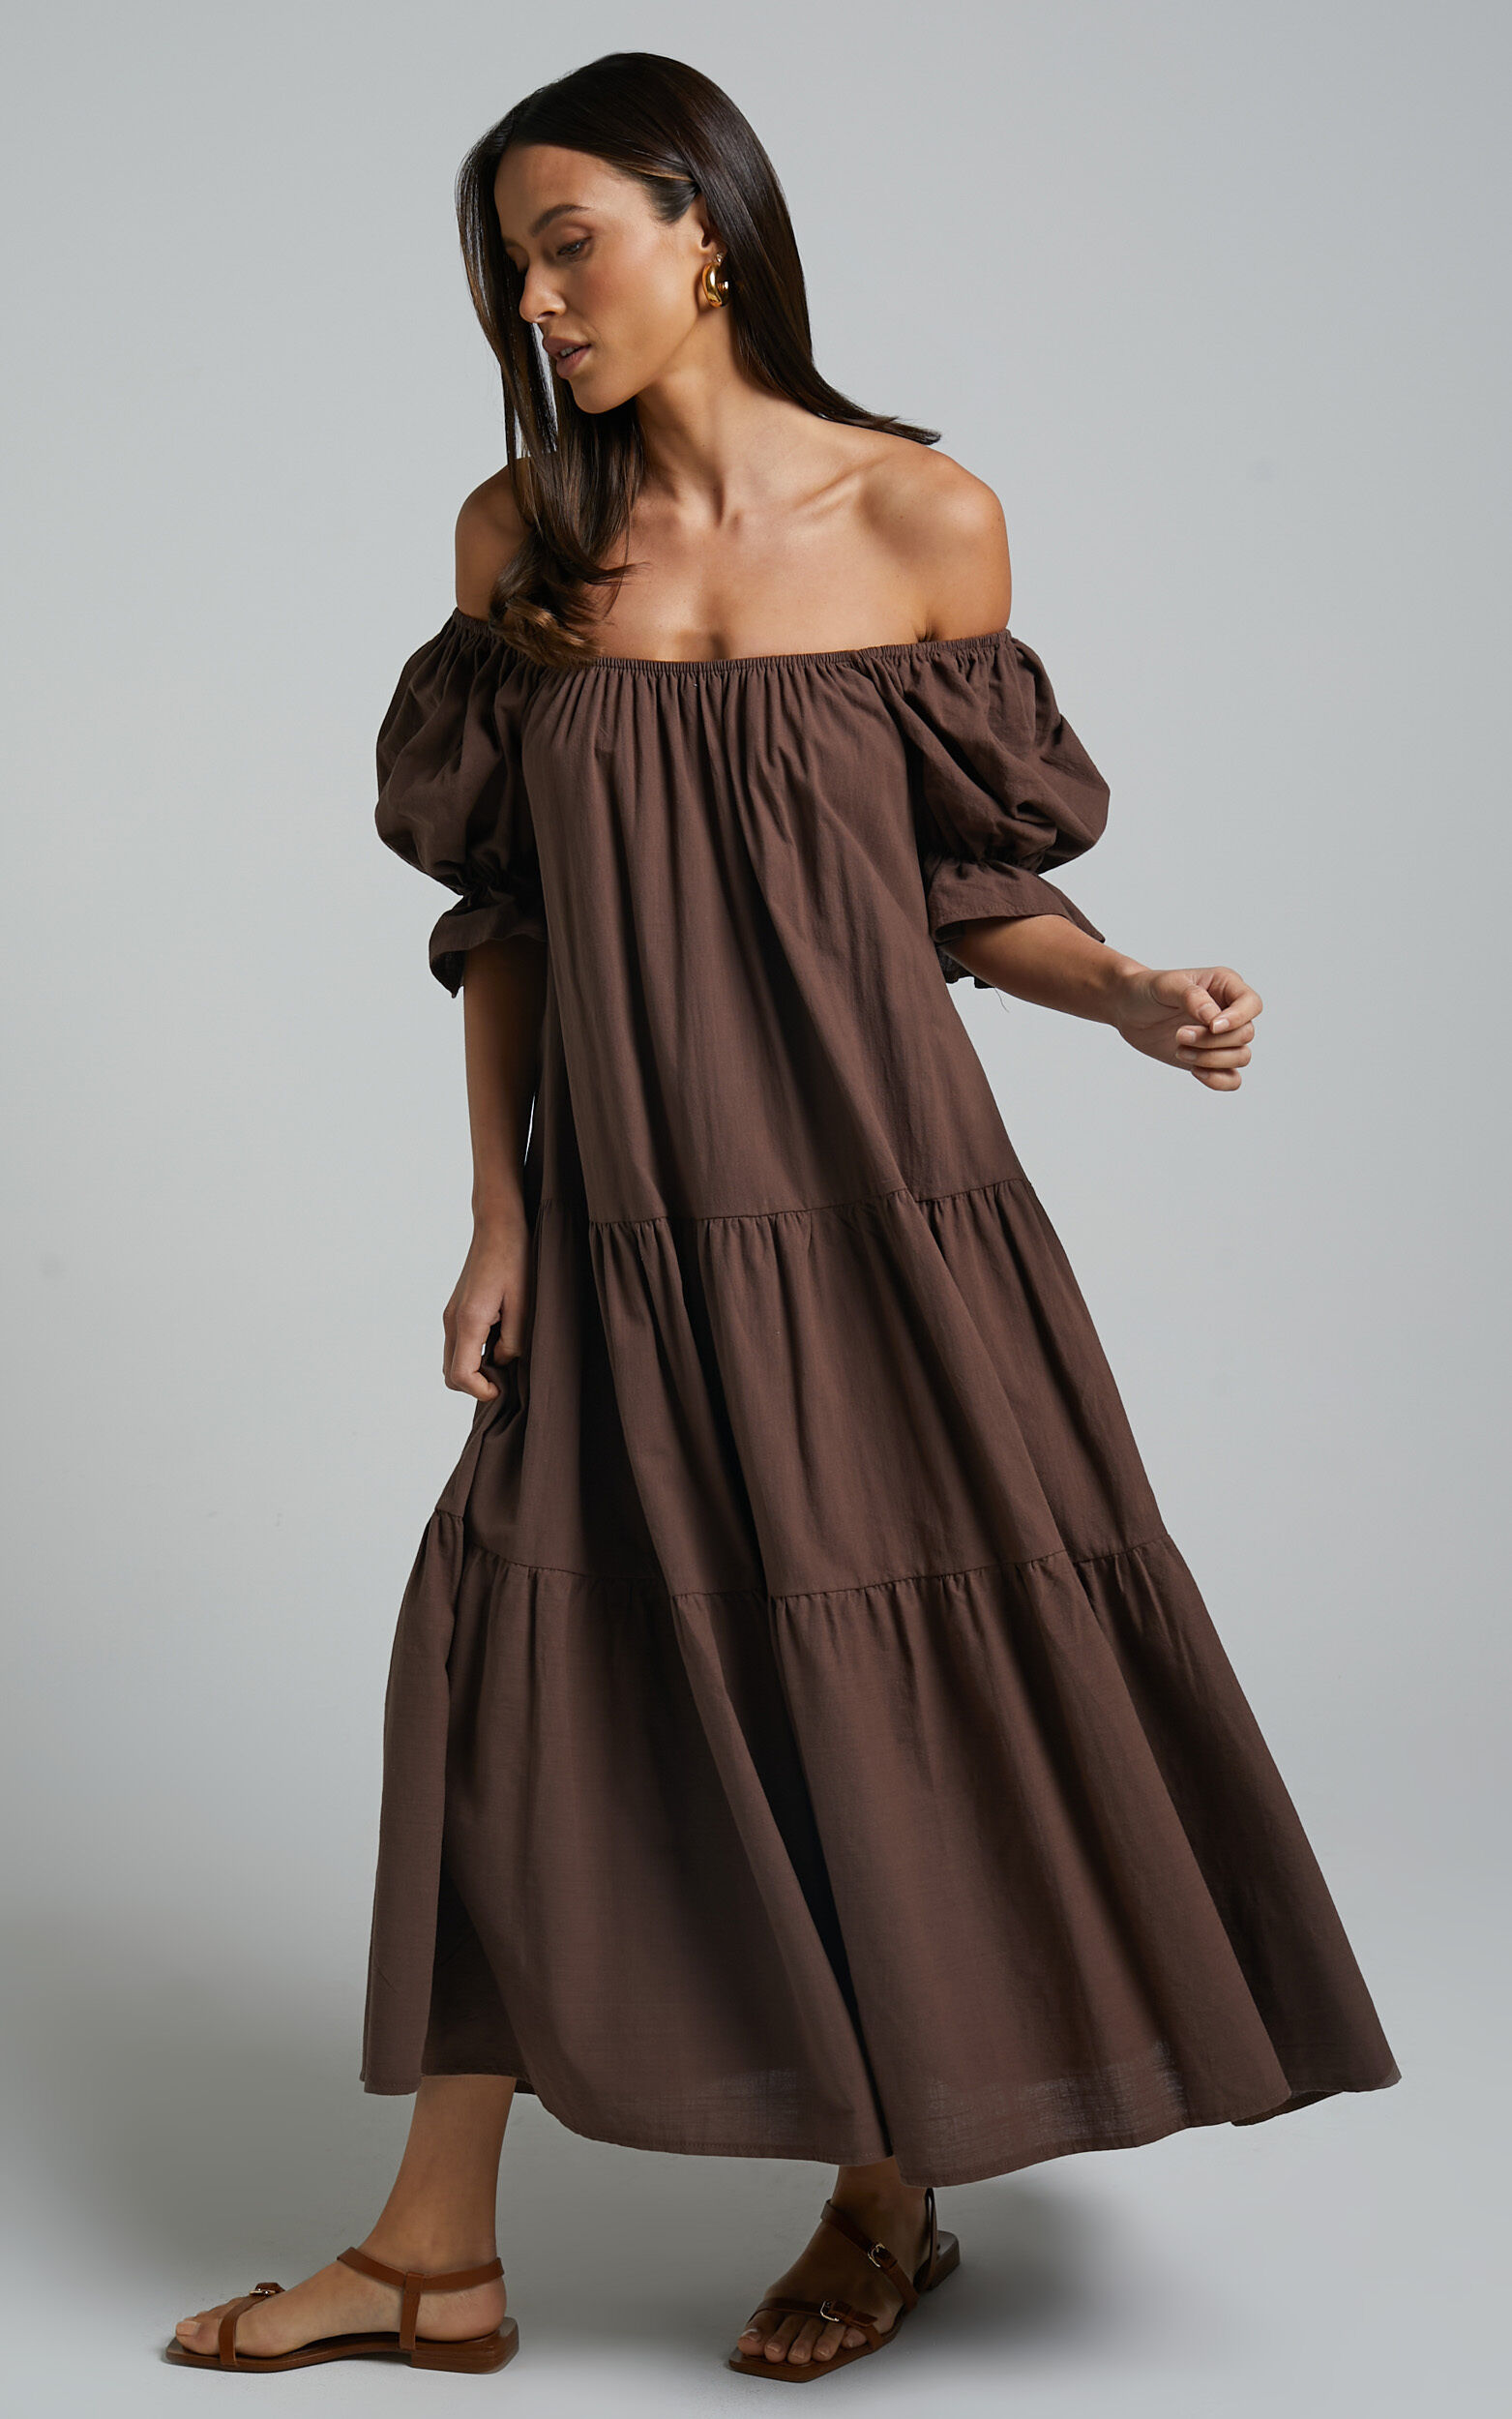 ARLES linen dress in Chocolate – 2isenough